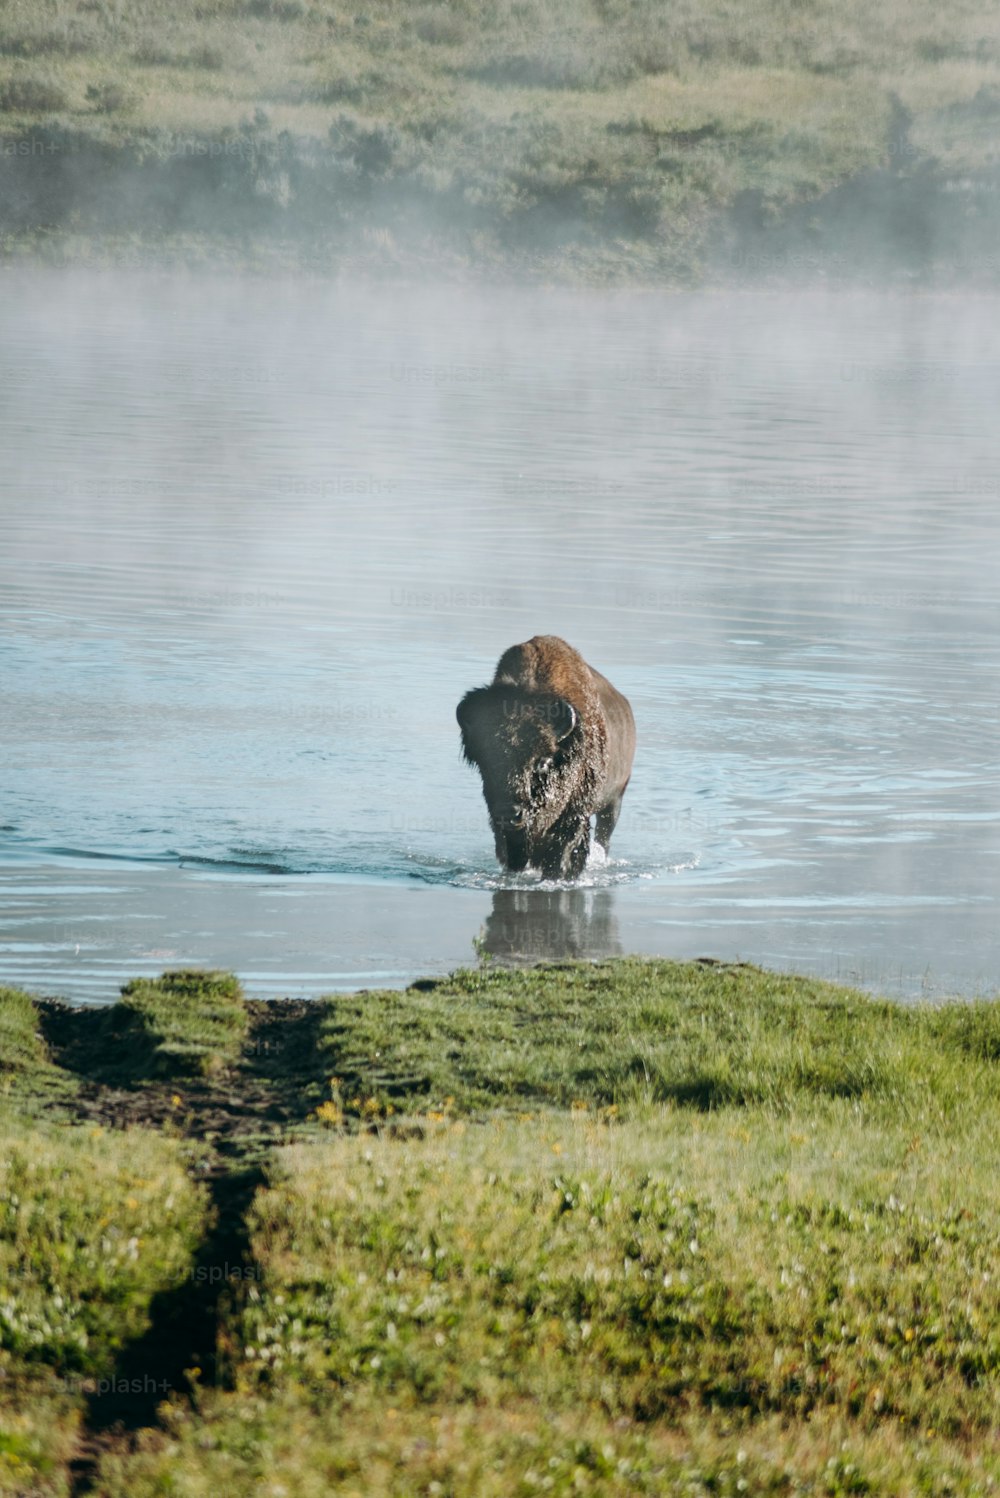 Un gran oso pardo caminando sobre un cuerpo de agua